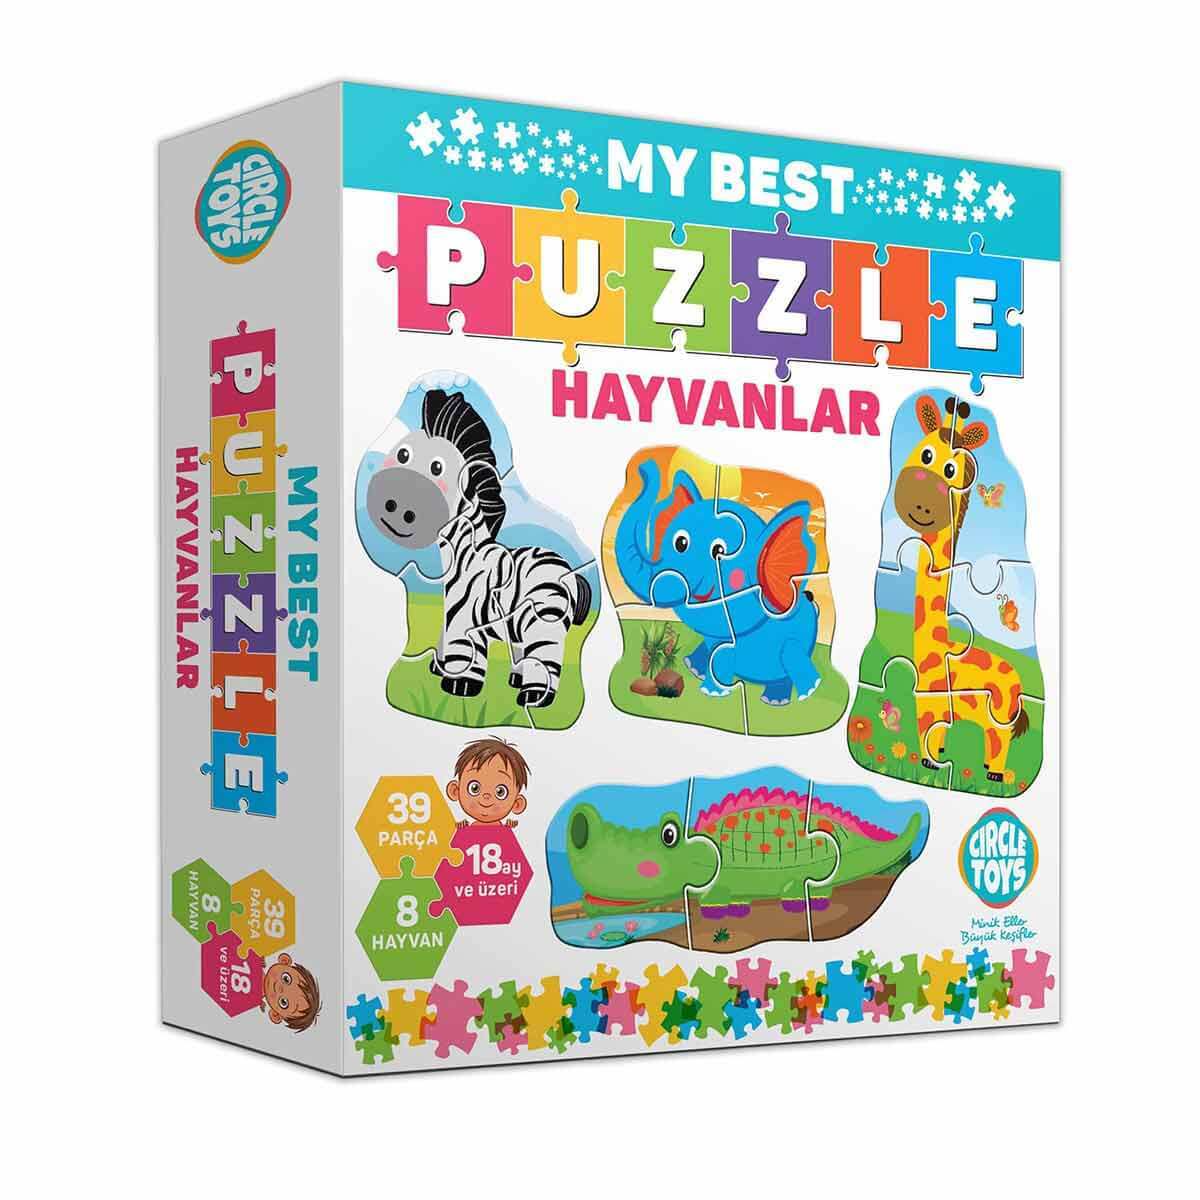 Circle Toys My Best Puzzle Hayvanlar  CRCL026